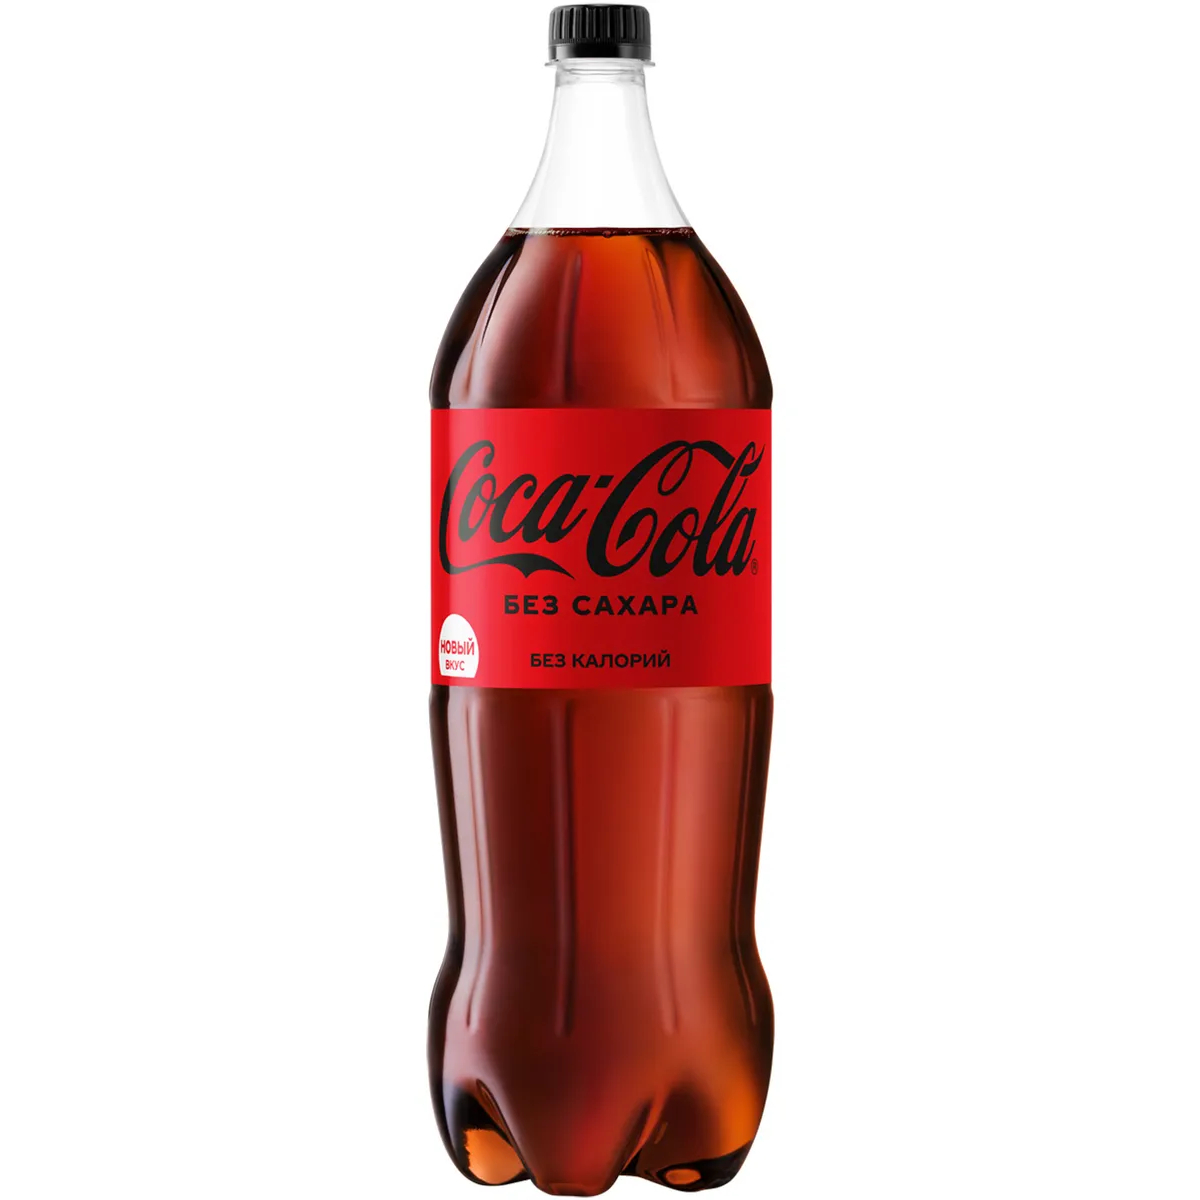 Напиток Coca-Cola Zero без сахара, 2 л coca cola кока кола импорт 0 33 литра ж б 24 шт в уп